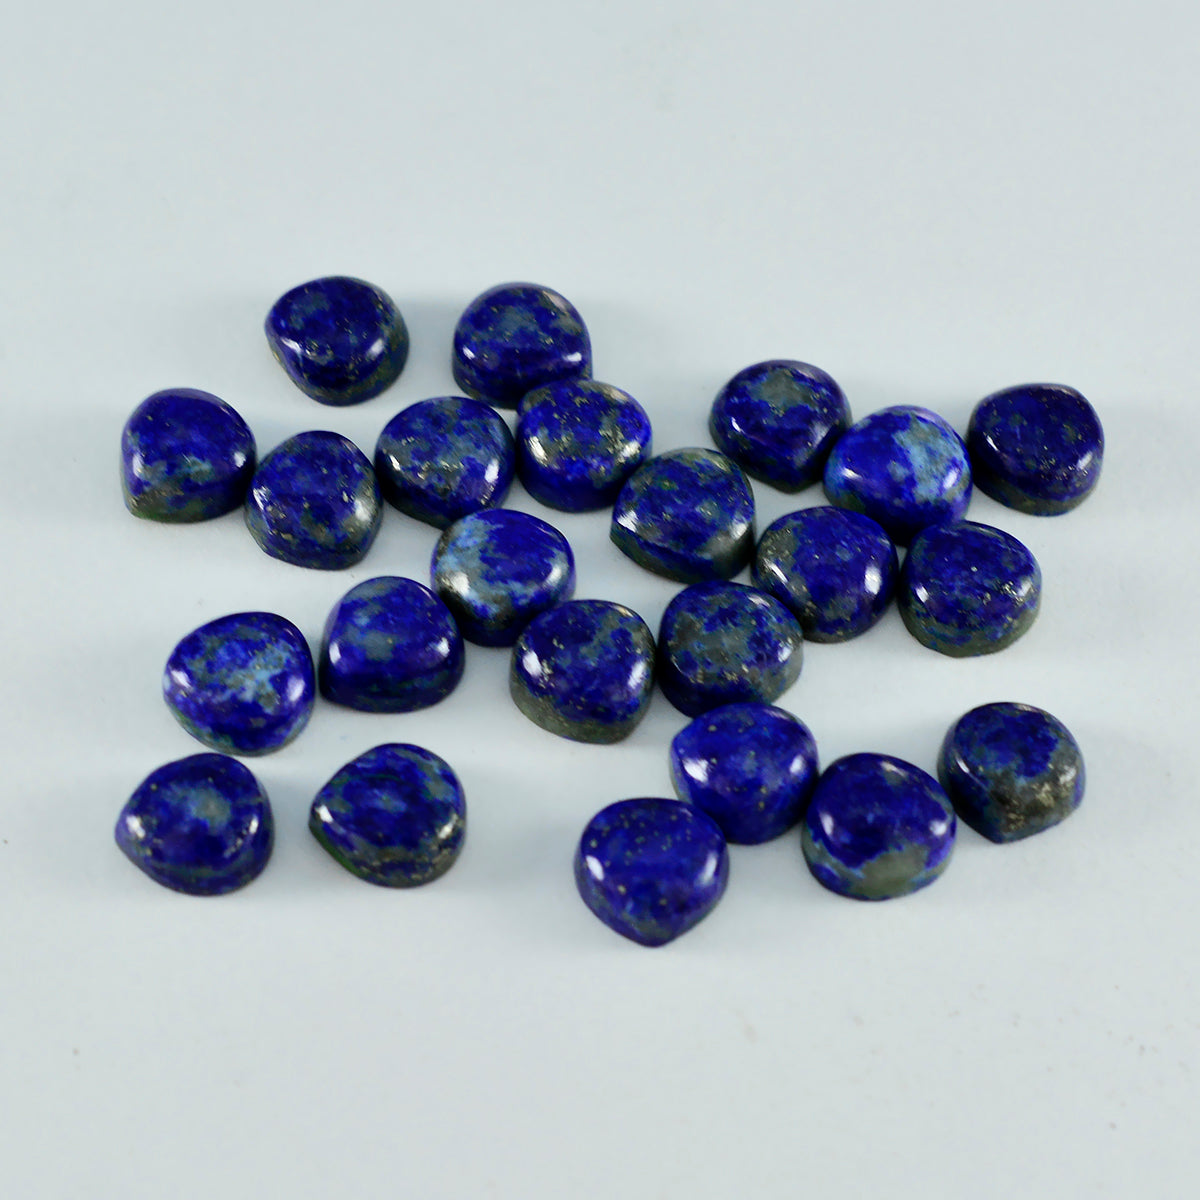 Riyogems 1PC Blue Lapis Lazuli Cabochon 4x4 mm Heart Shape A Quality Gemstone